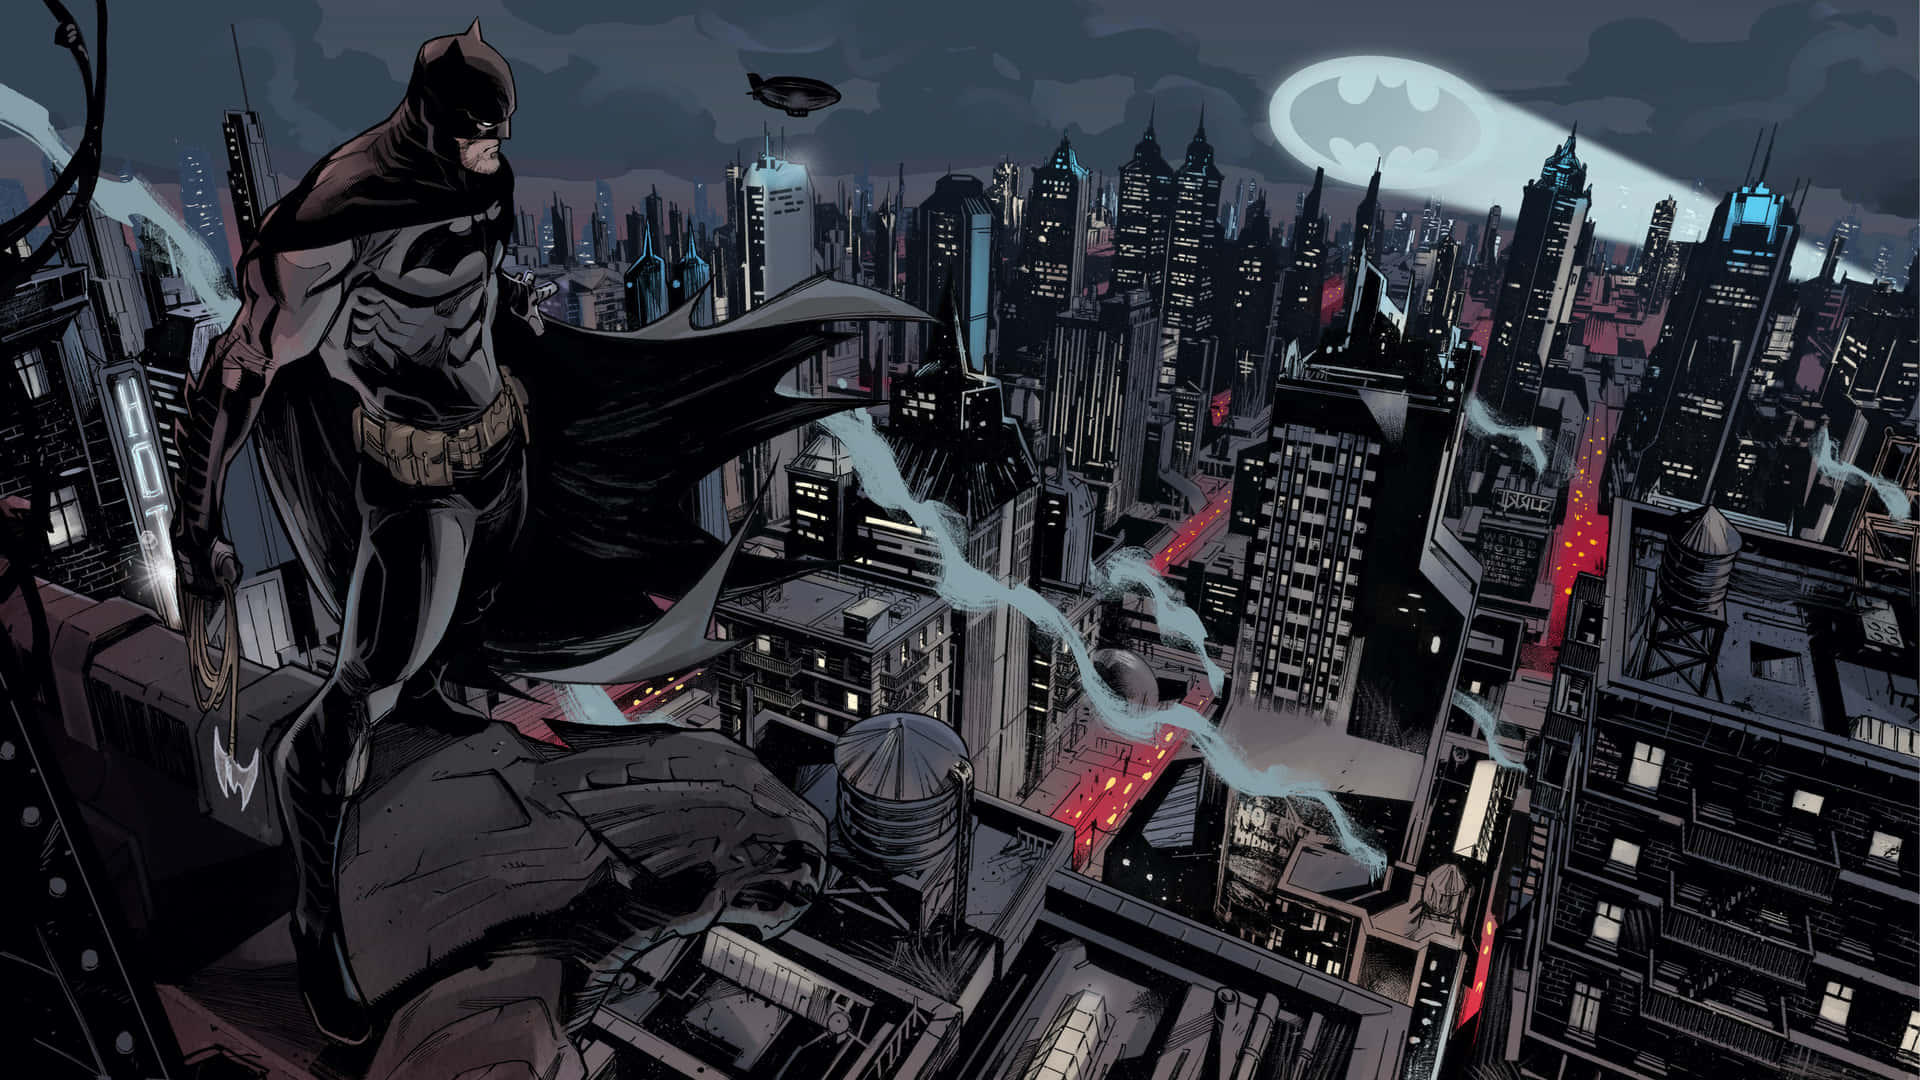 100+] Gotham City Background s for FREE 